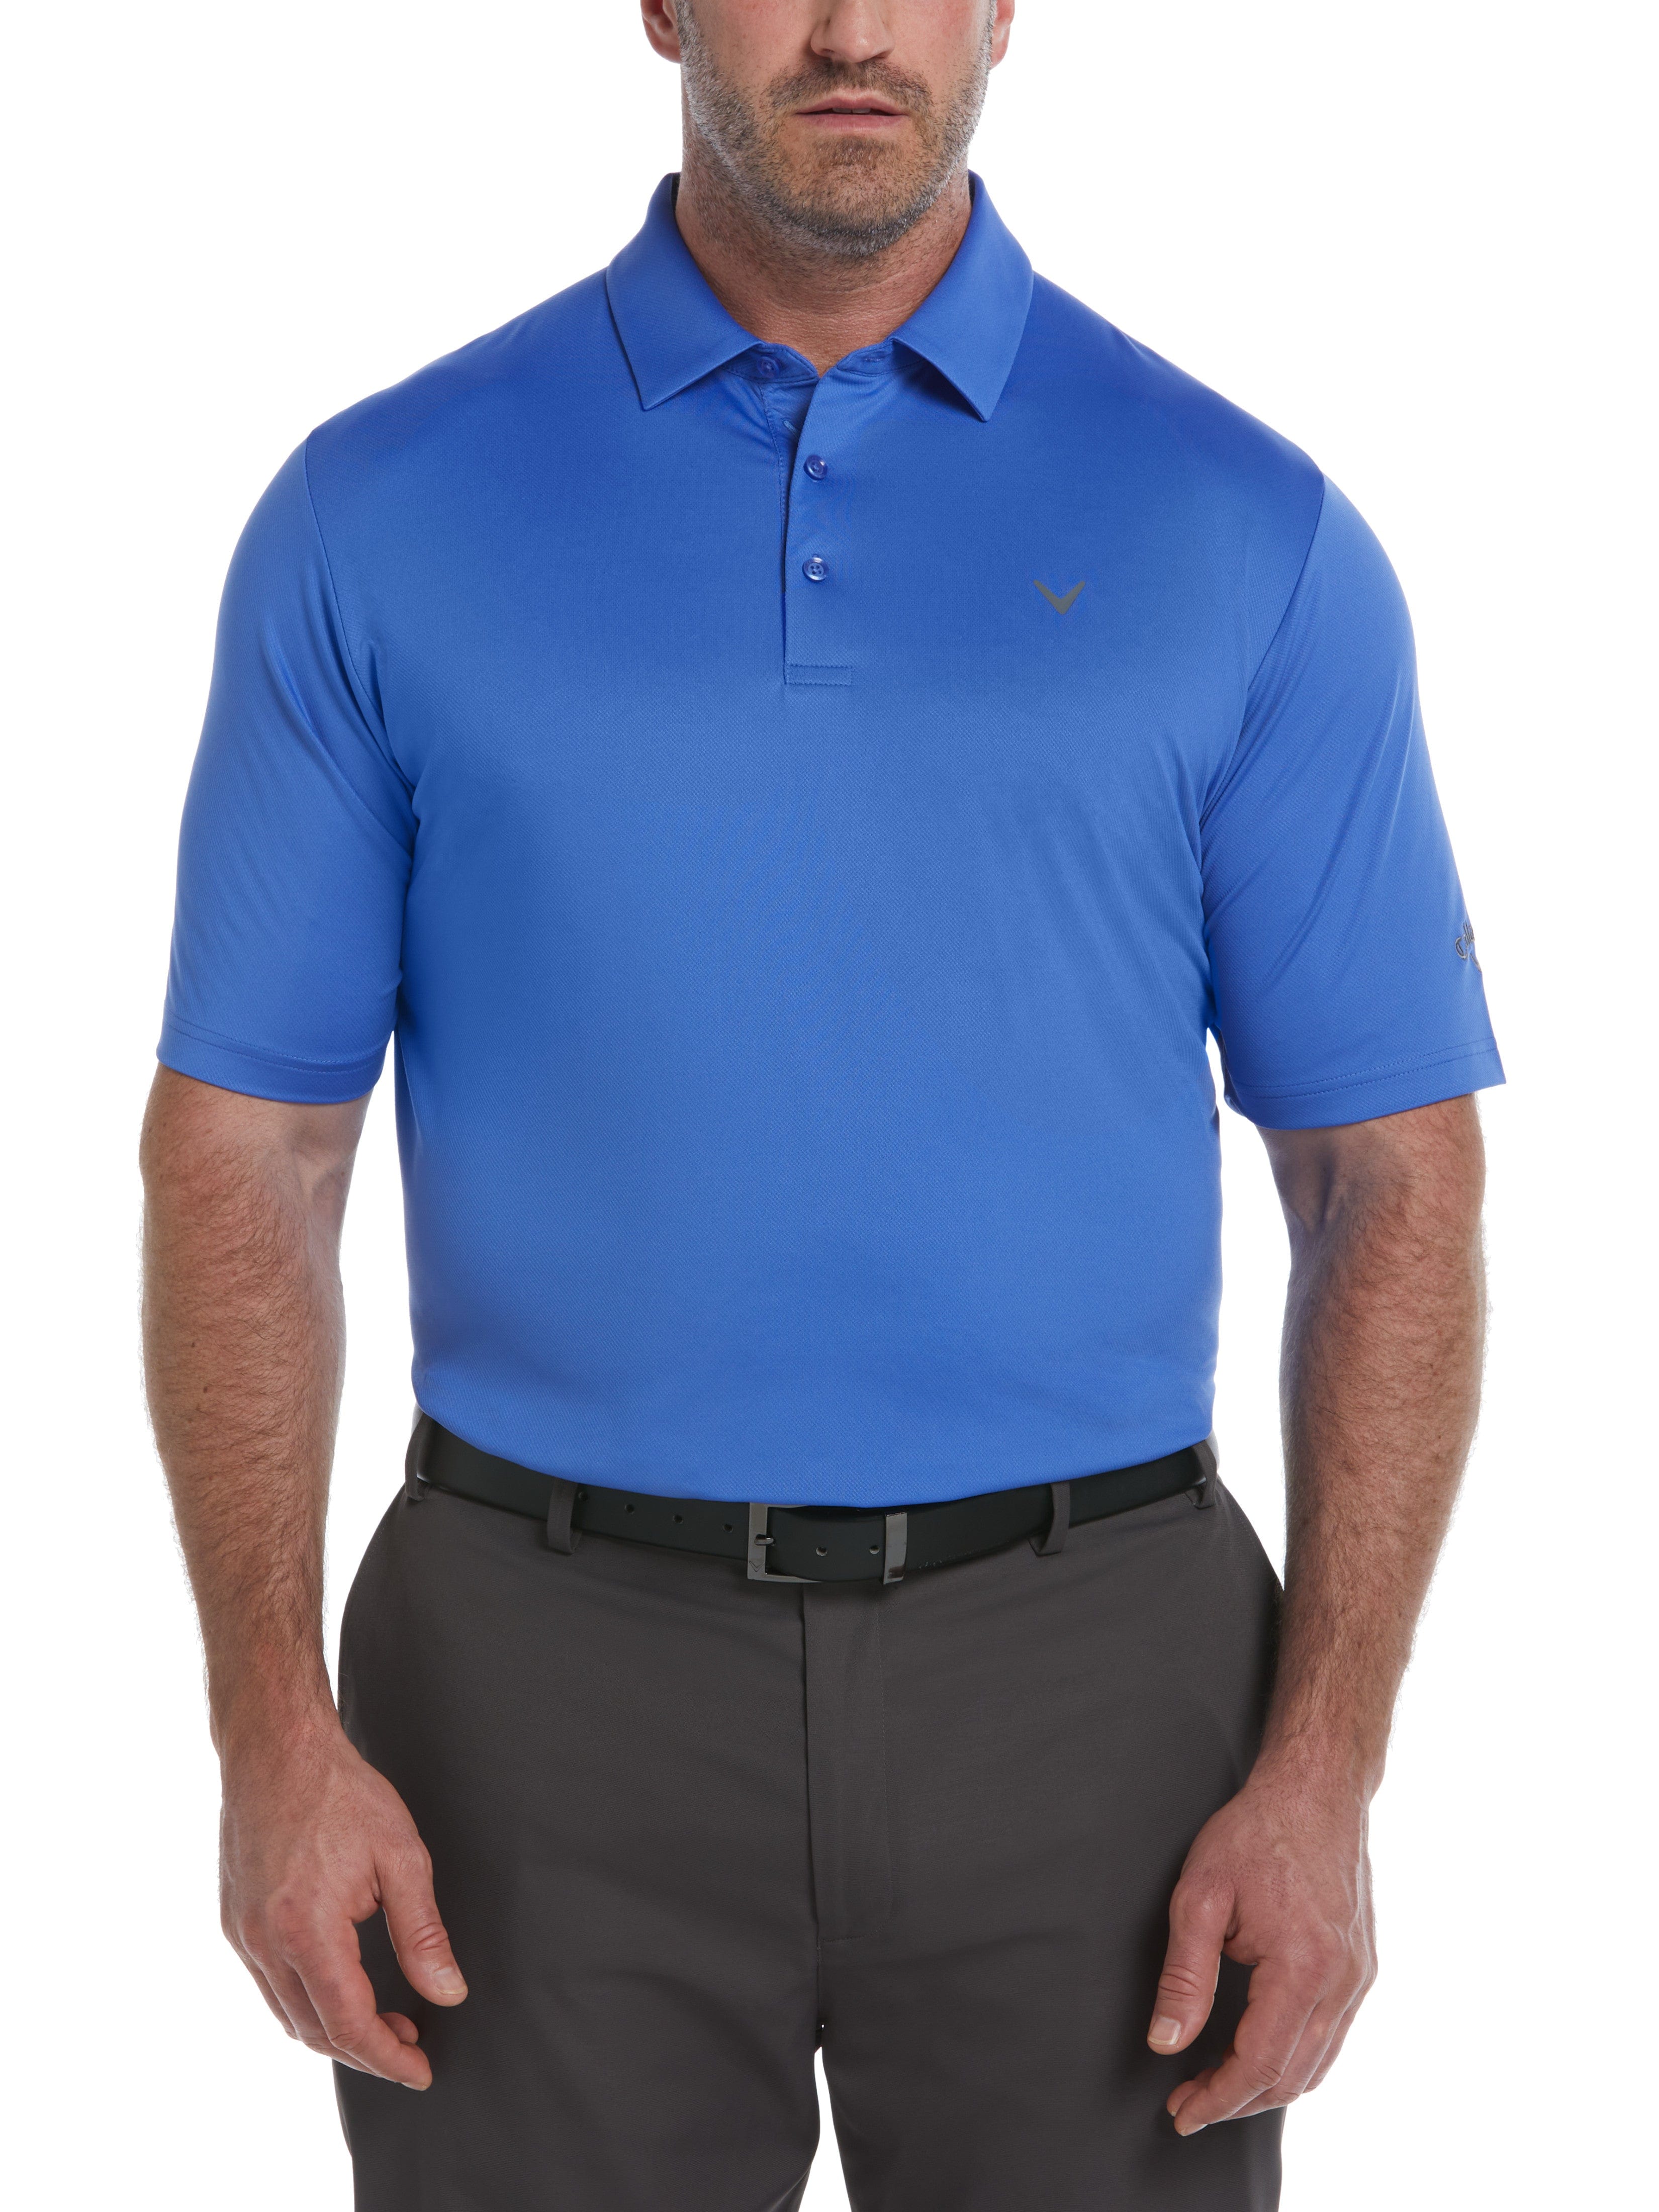 Callaway Apparel Mens Big & Tall Solid Swing Tech Golf Polo Shirt, Size 5X, Amparo Blue, Polyester/Elastane | Golf Apparel Shop